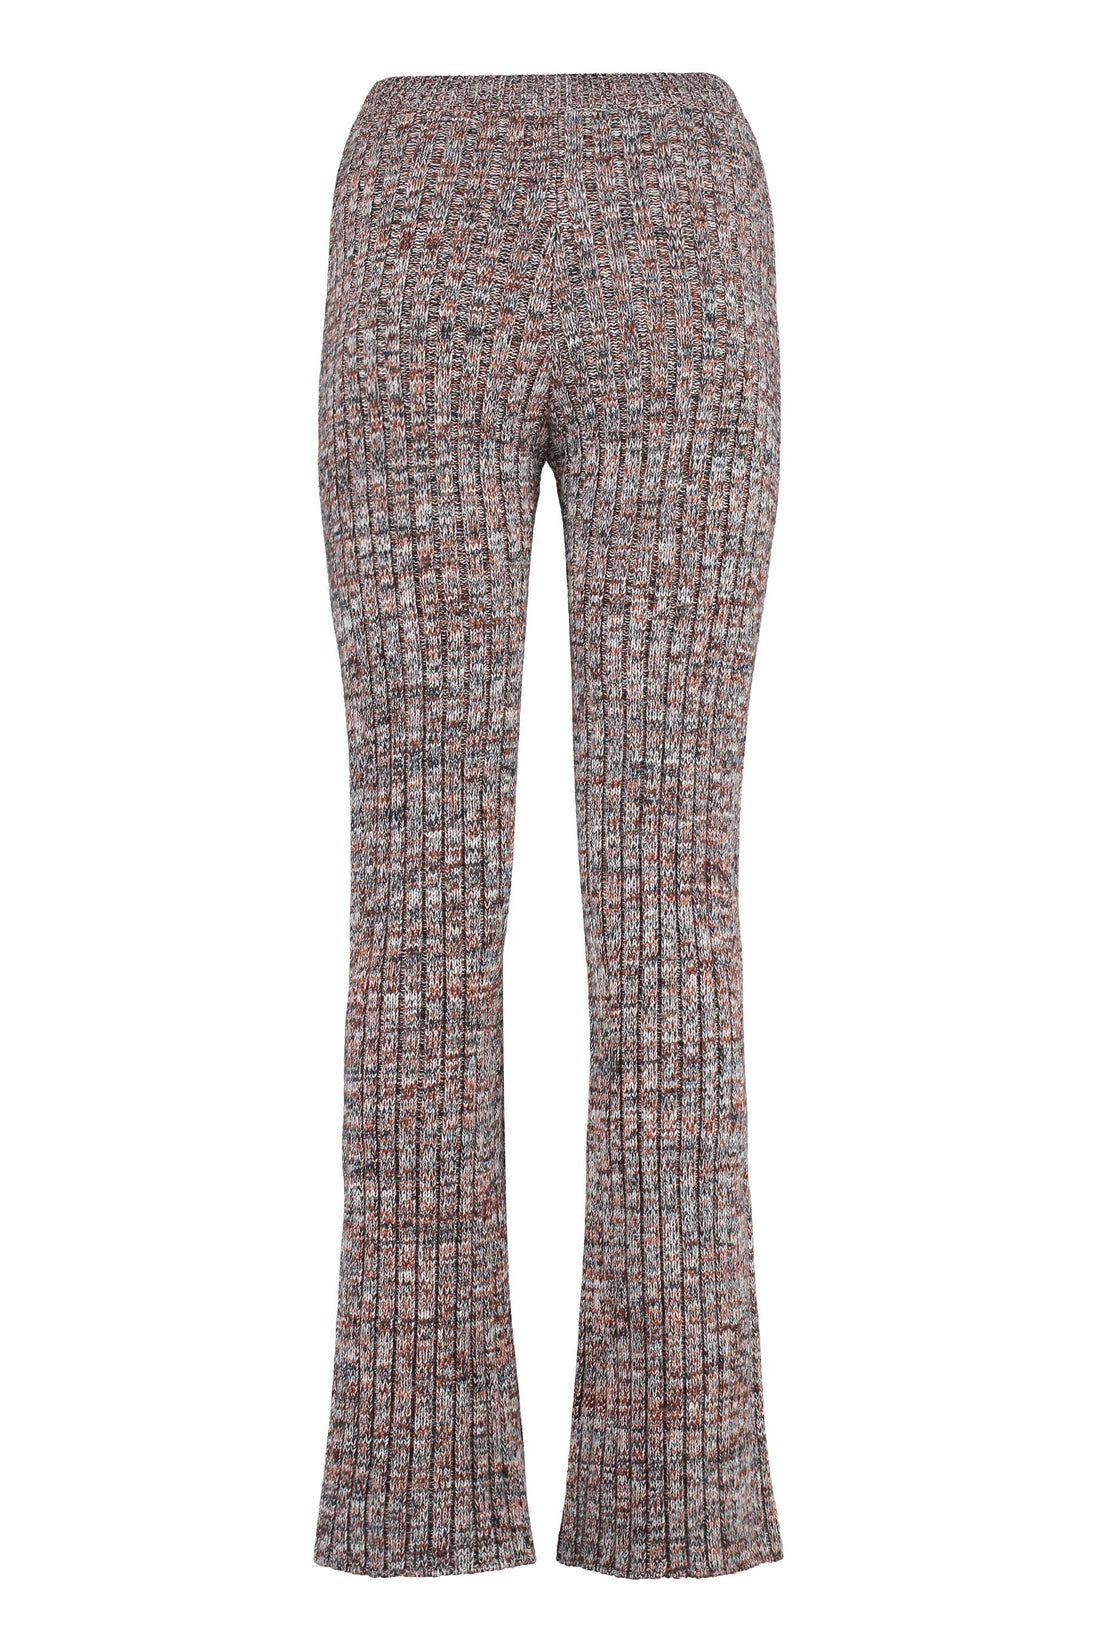 Chloé-OUTLET-SALE-Ribbed knit trousers-ARCHIVIST